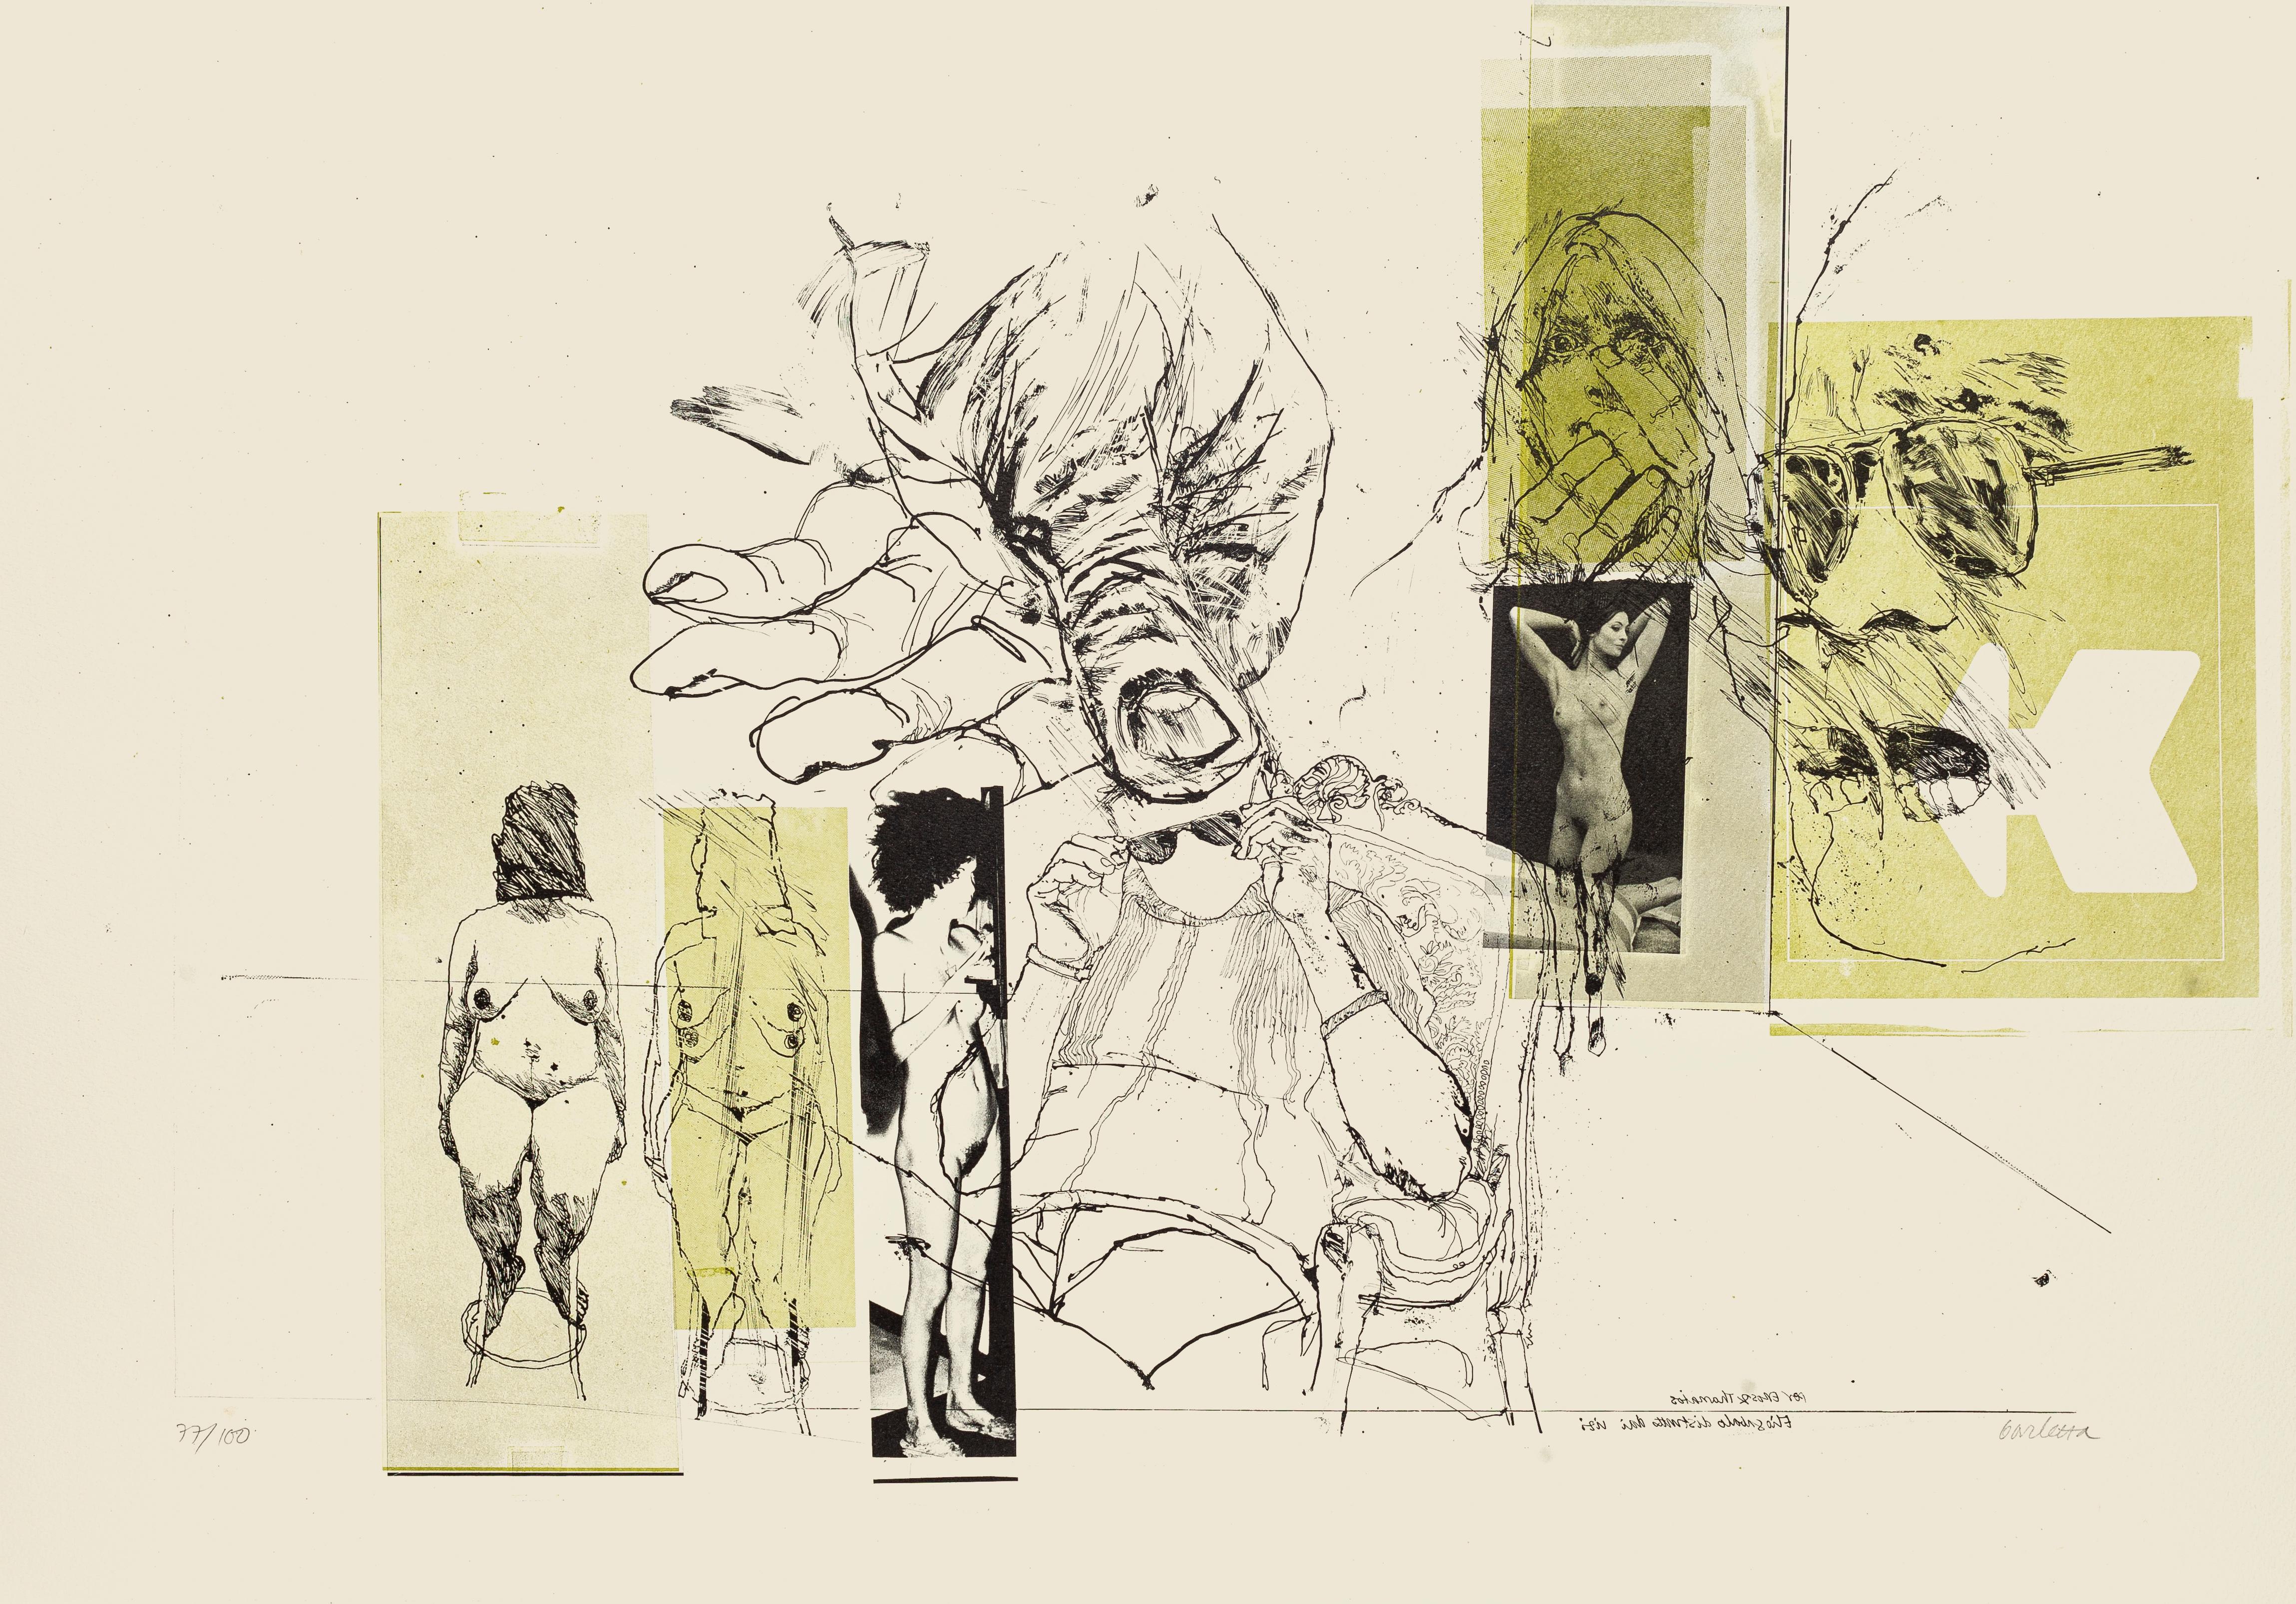 Nude and Hand - Original Lithograph by Sergi Barletta - 1970s